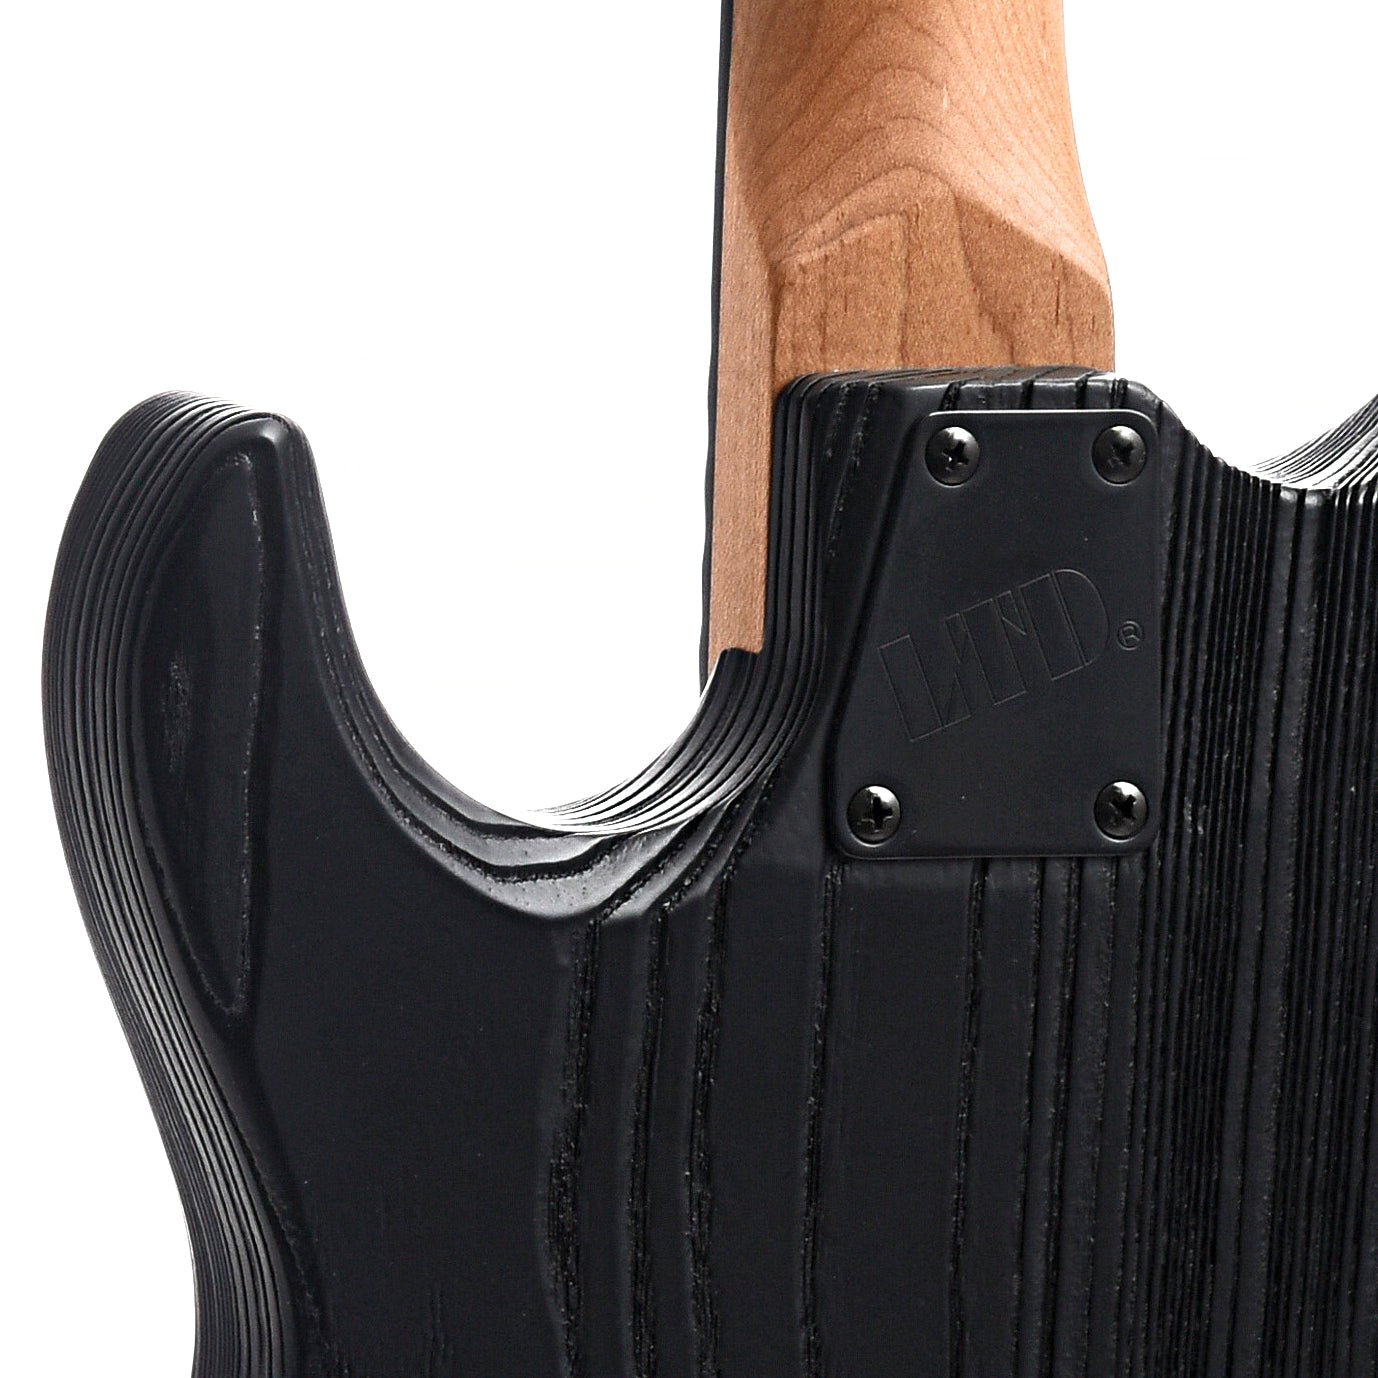 Image 9 of ESP LTD SN1-HT Electric Guitar, Black Blast Finish - SKU# SN1HT-BB : Product Type Solid Body Electric Guitars : Elderly Instruments